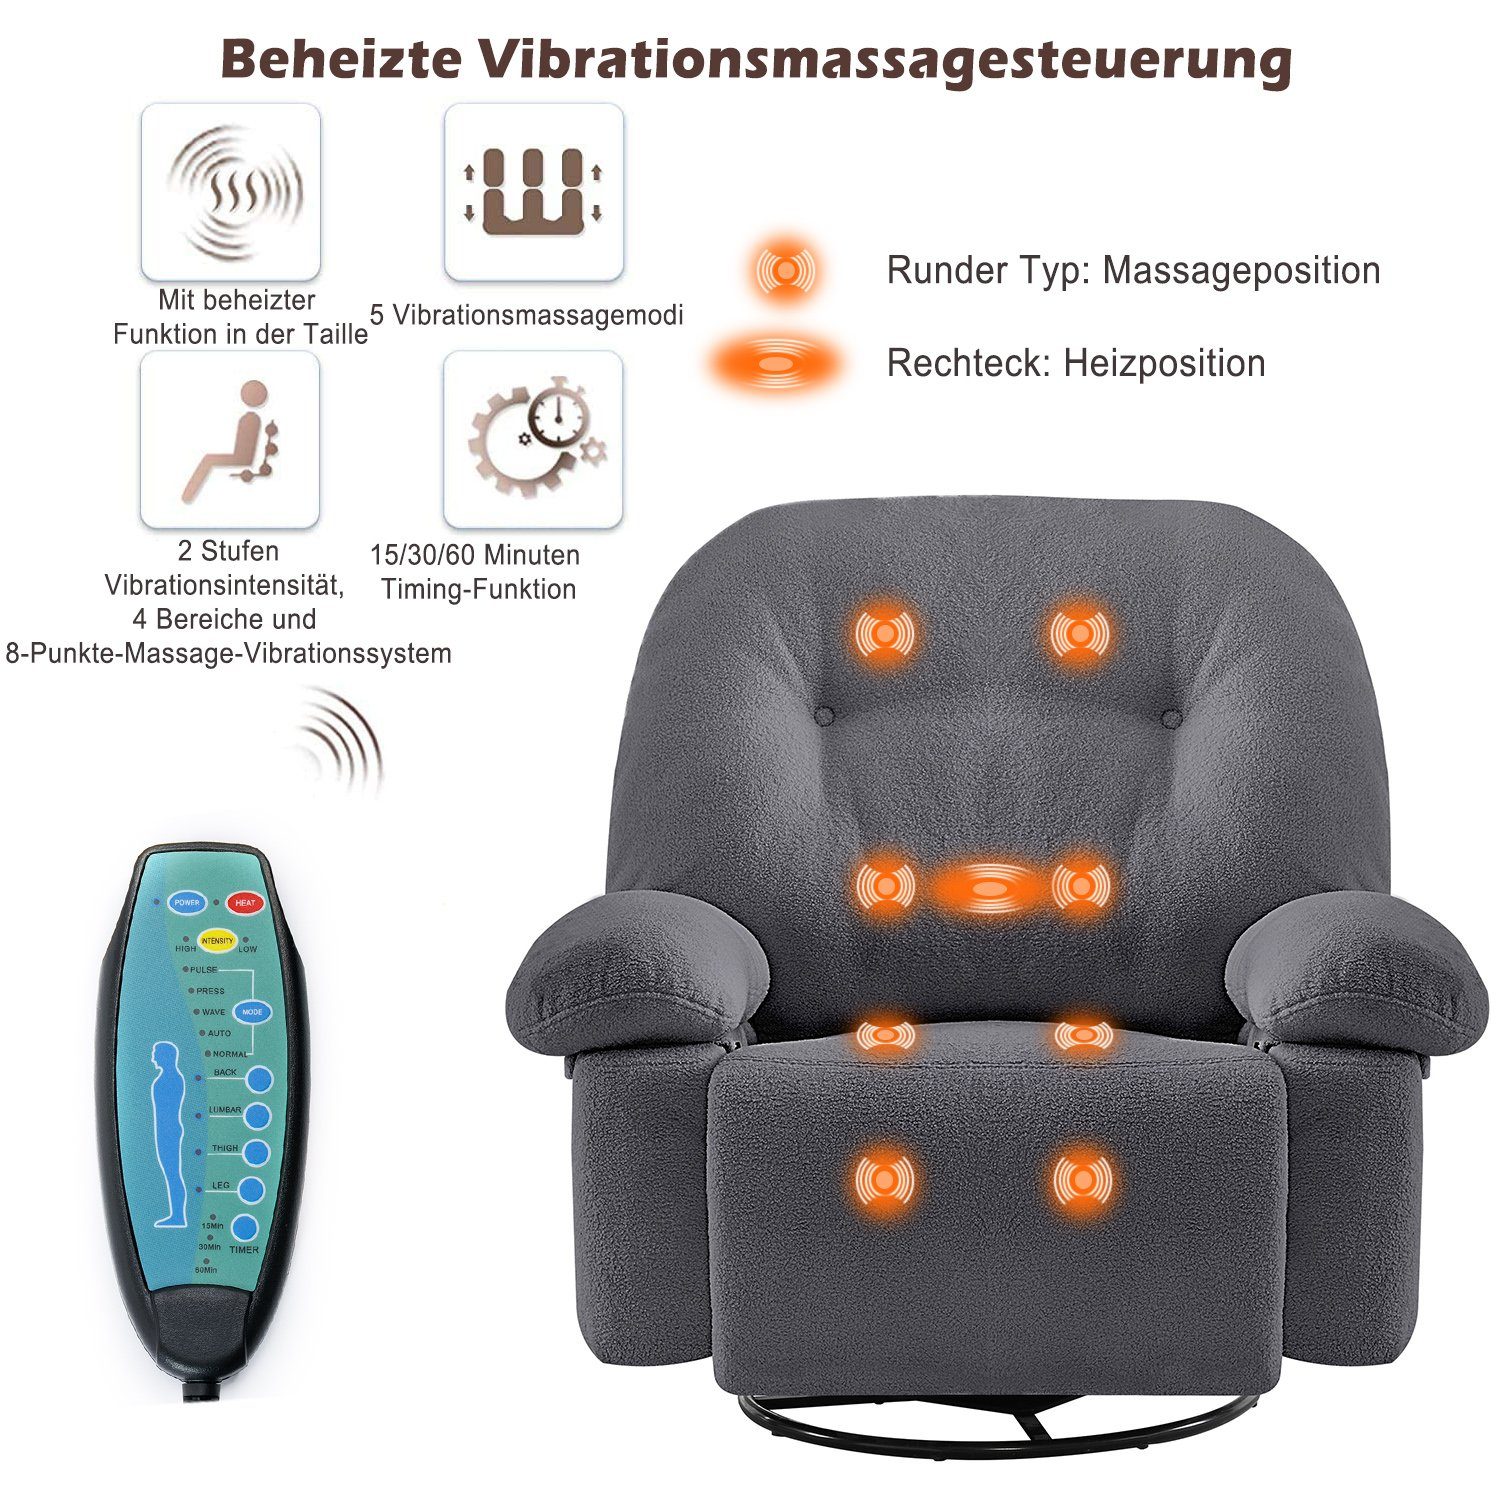 Timer und Drehfunktion Ulife 360° Grau Loungesessel, Relaxsessel mit 360°-Drehsessel TV-Sessel Sessel Massagesessel